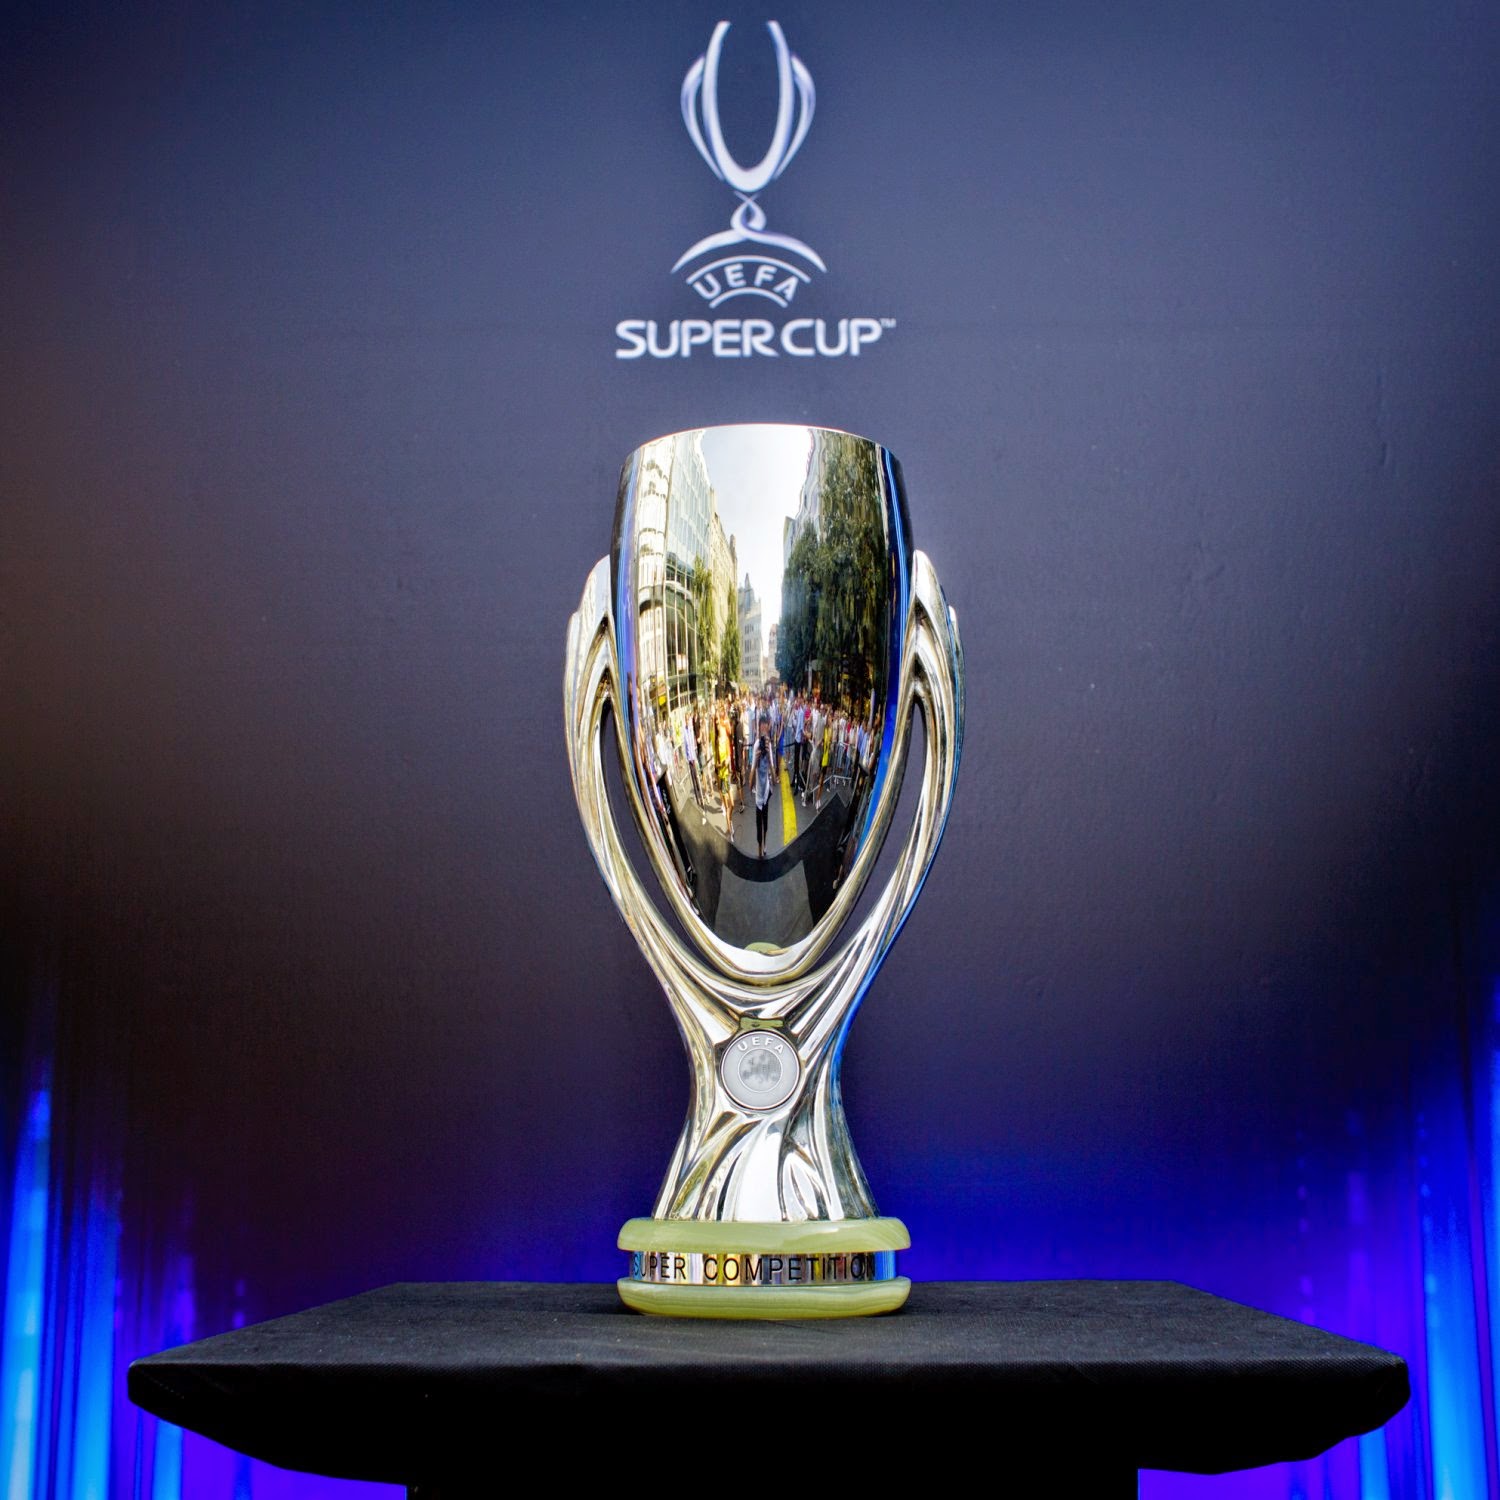 Prediksi Skor Real Madrid vs Sevilla 13 Agustus 2014 - UEFA Super Cup